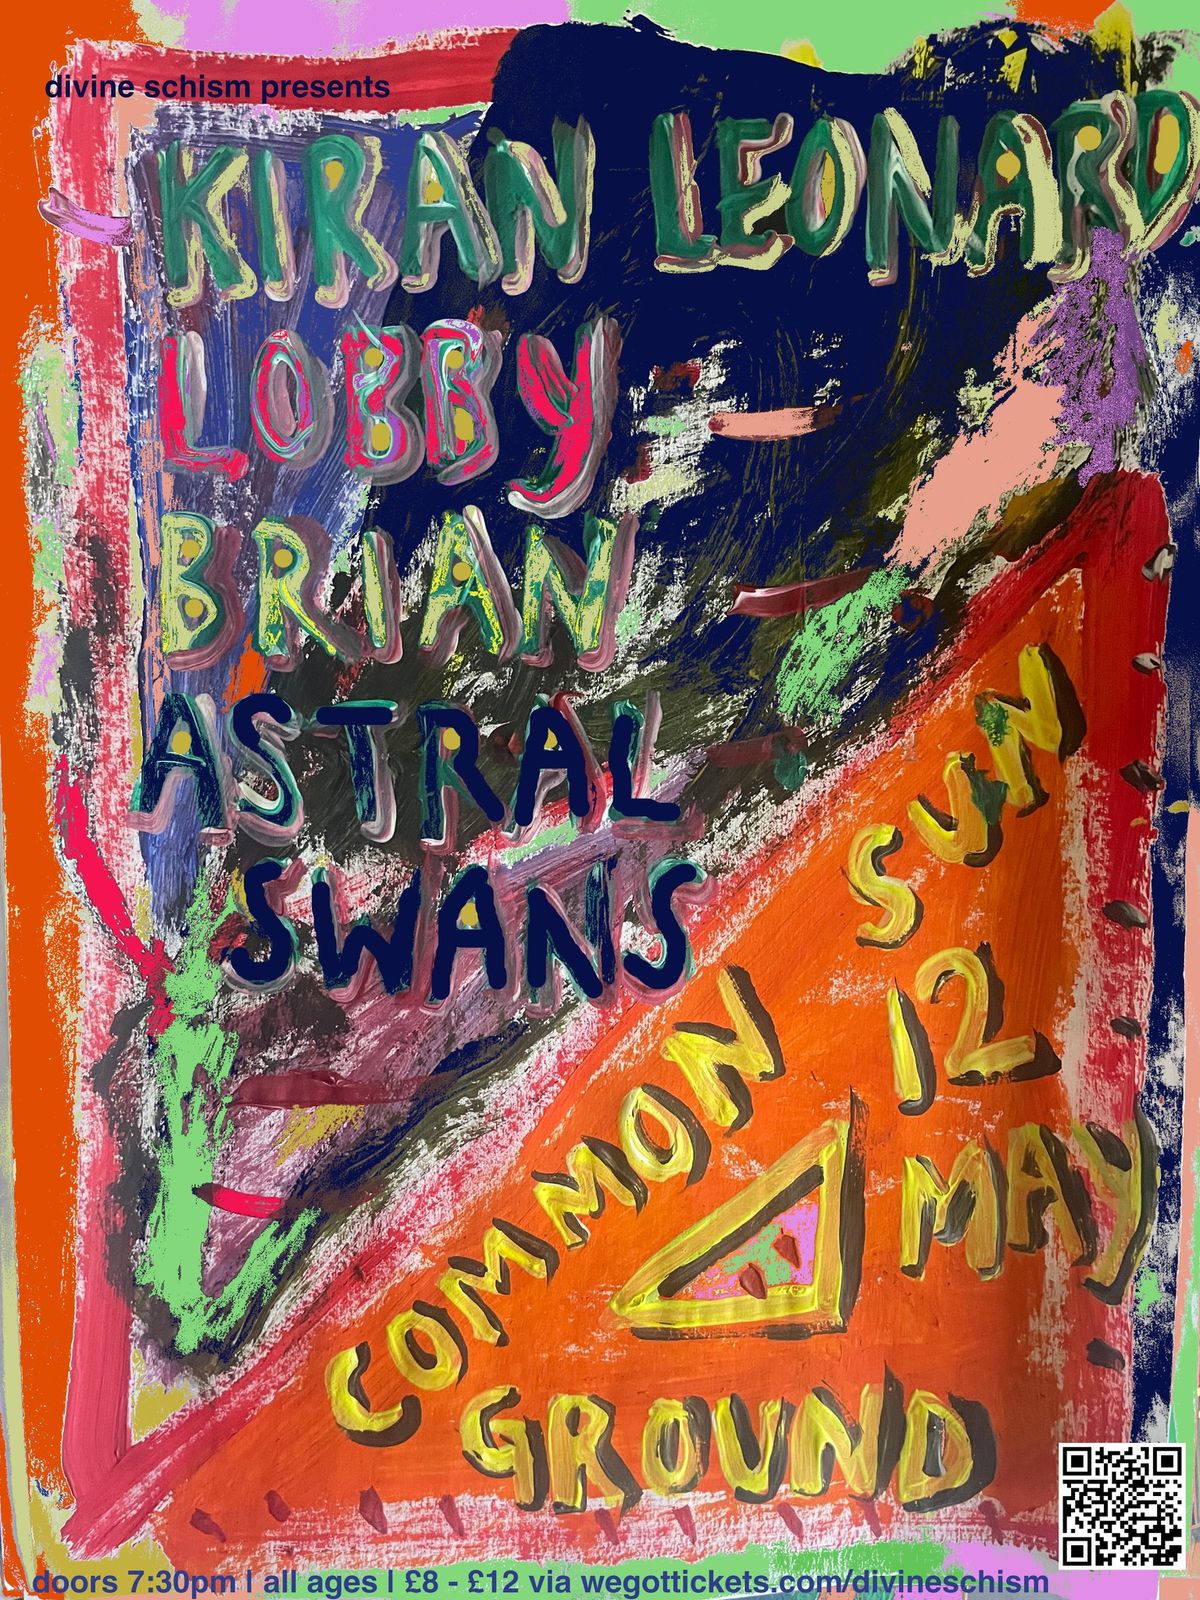 Divine Schism: Kiran Leonard + lobby + Brian + Astral Swans